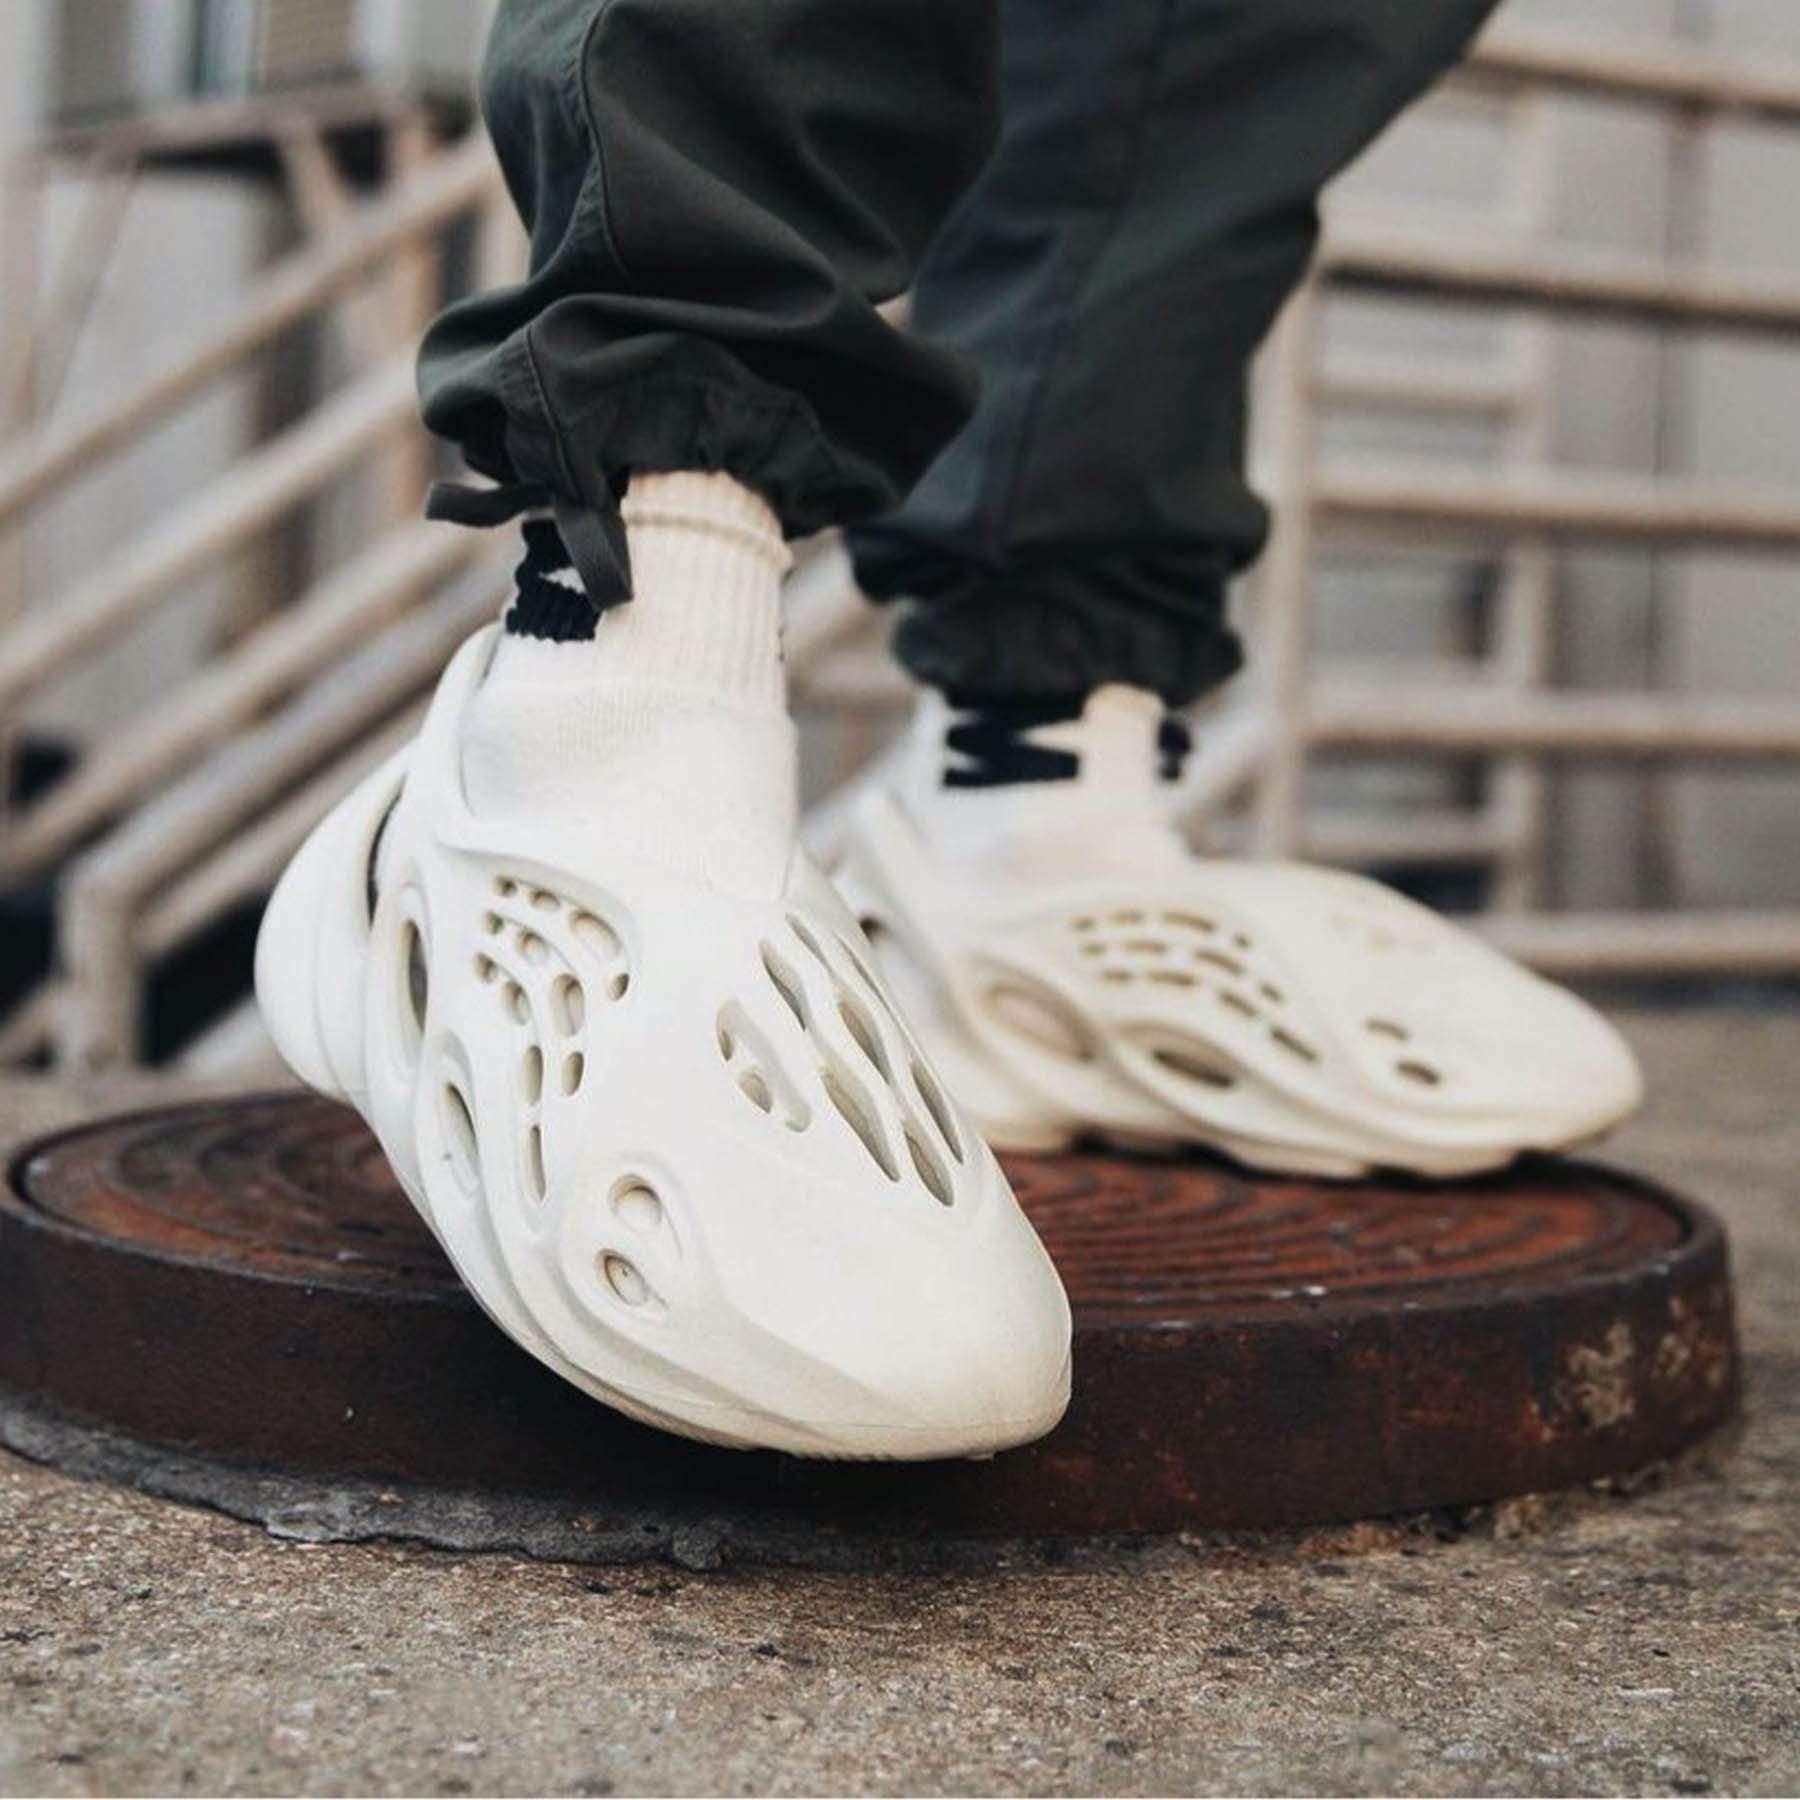 adidas Yeezy Foam Runner ‘Sand’ — Kick Game